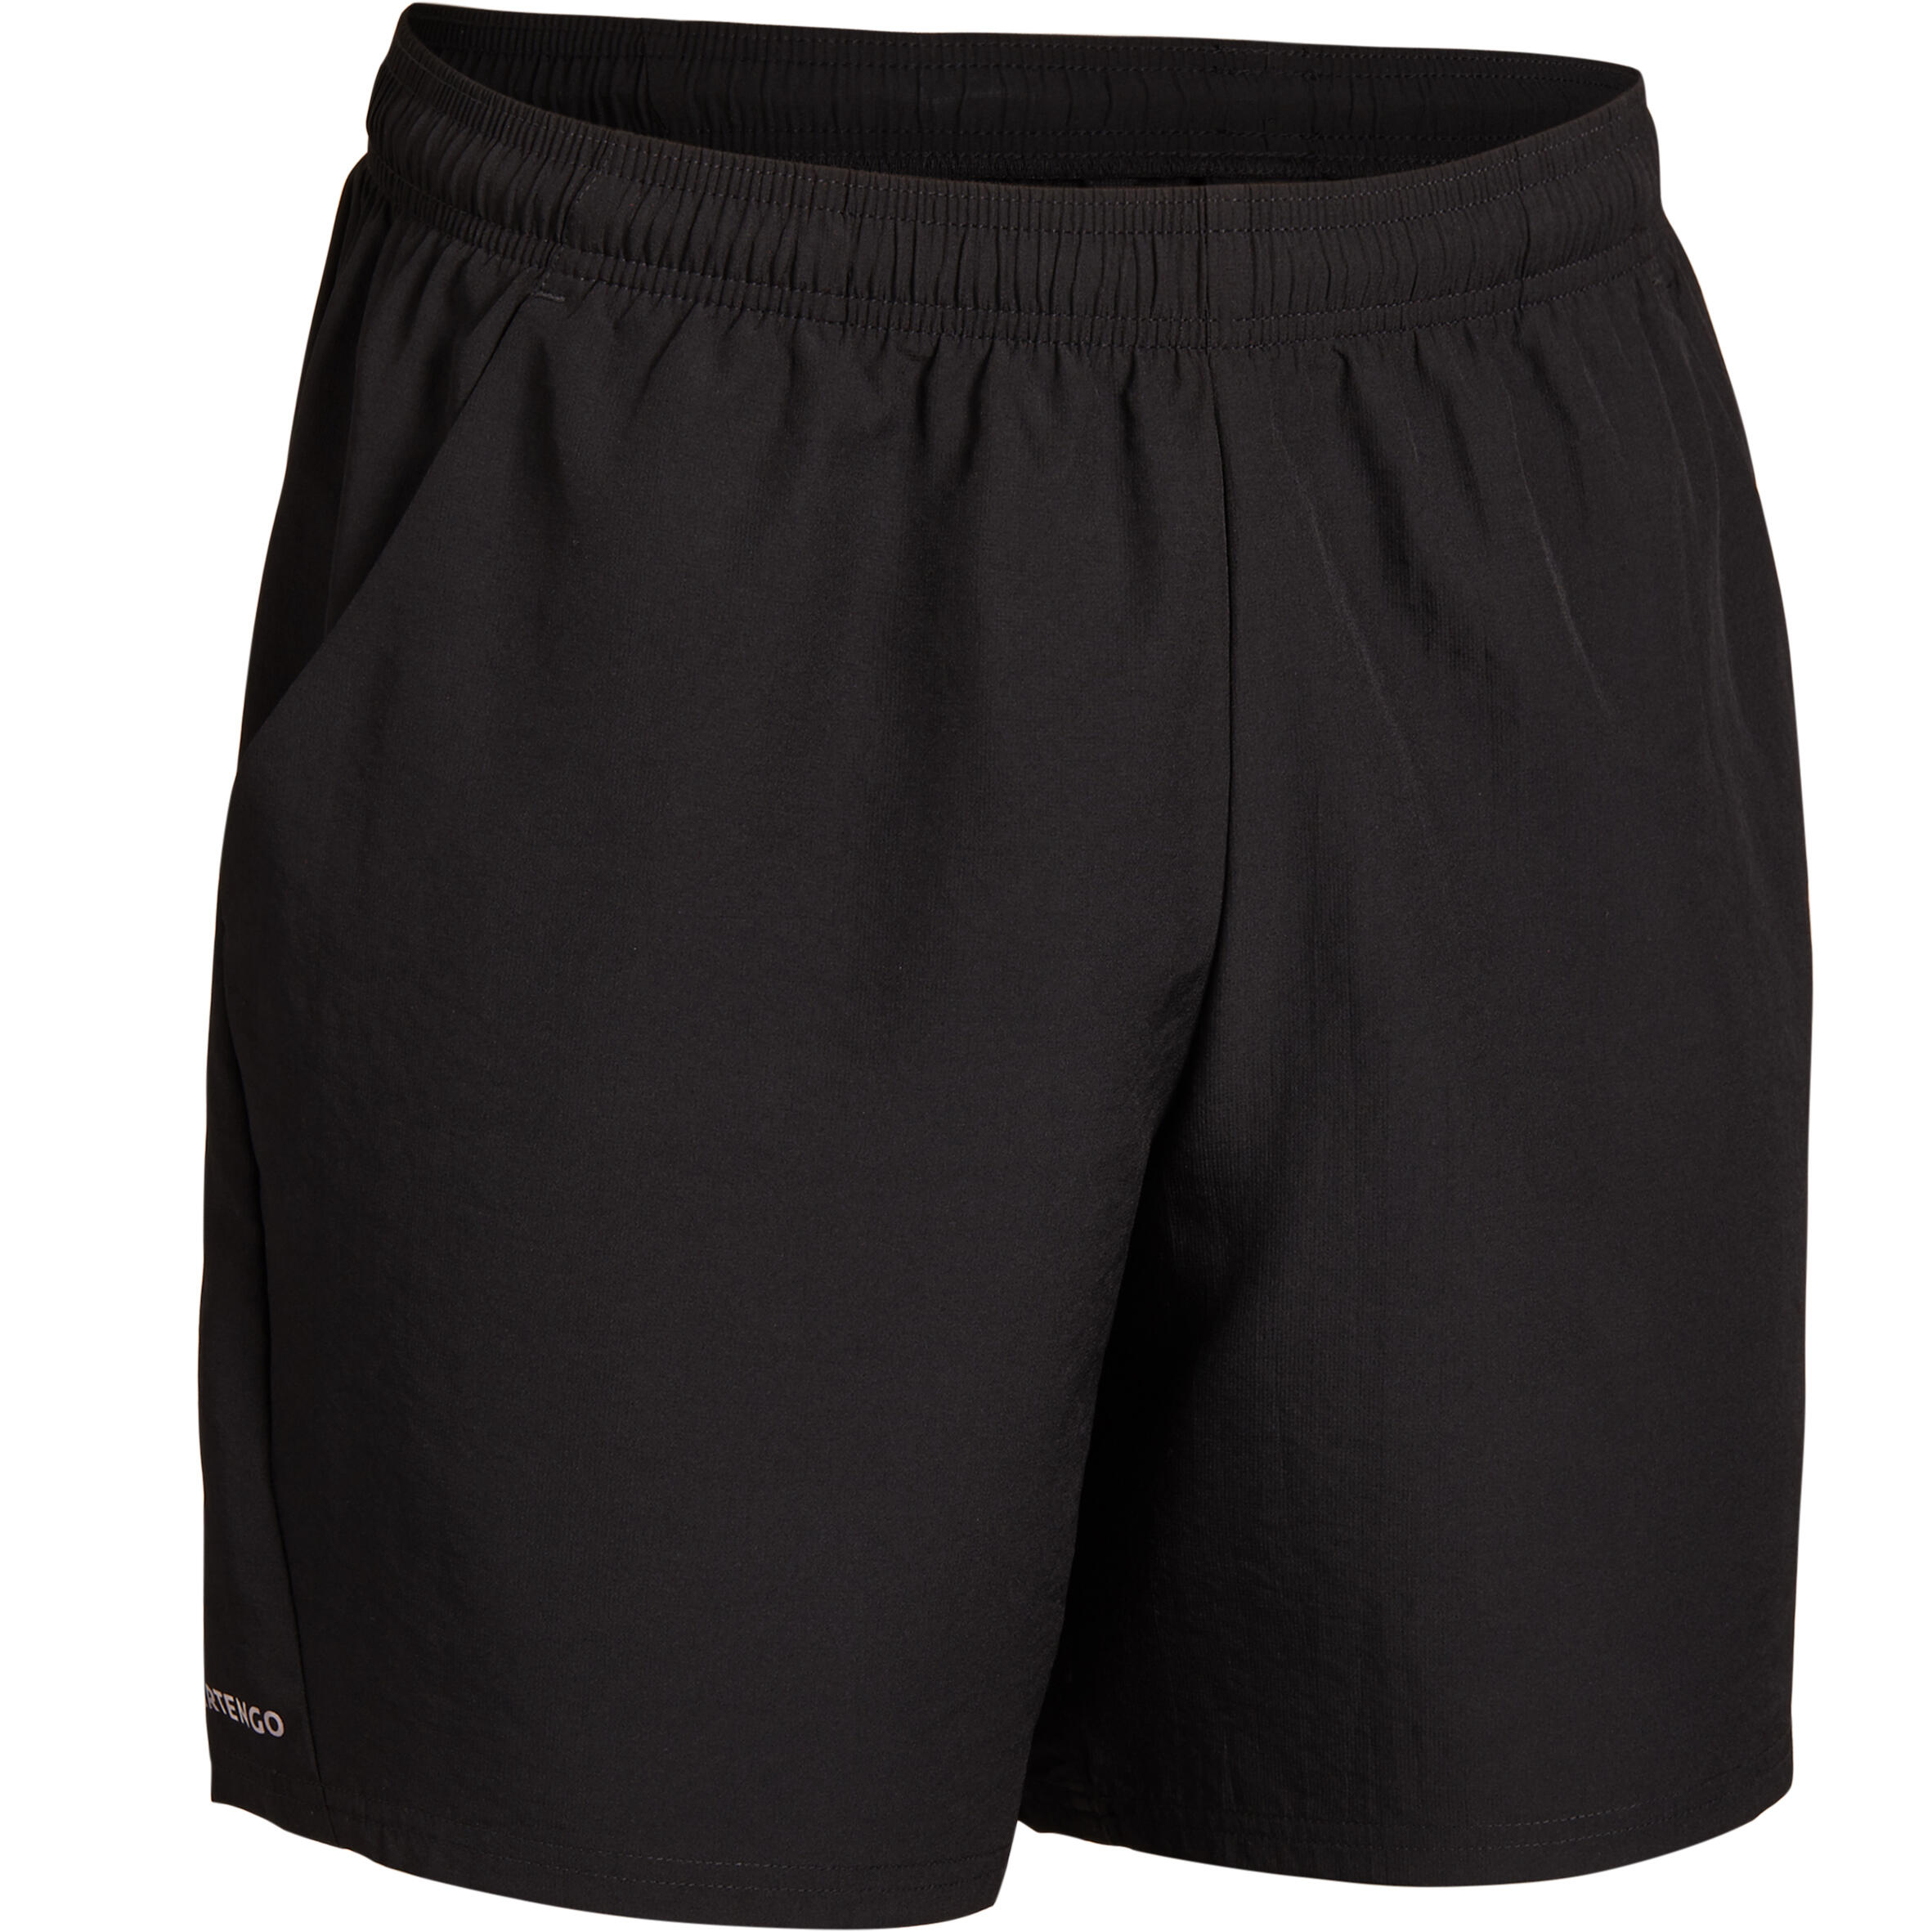 Dry 100 Tennis Shorts - Black - Decathlon